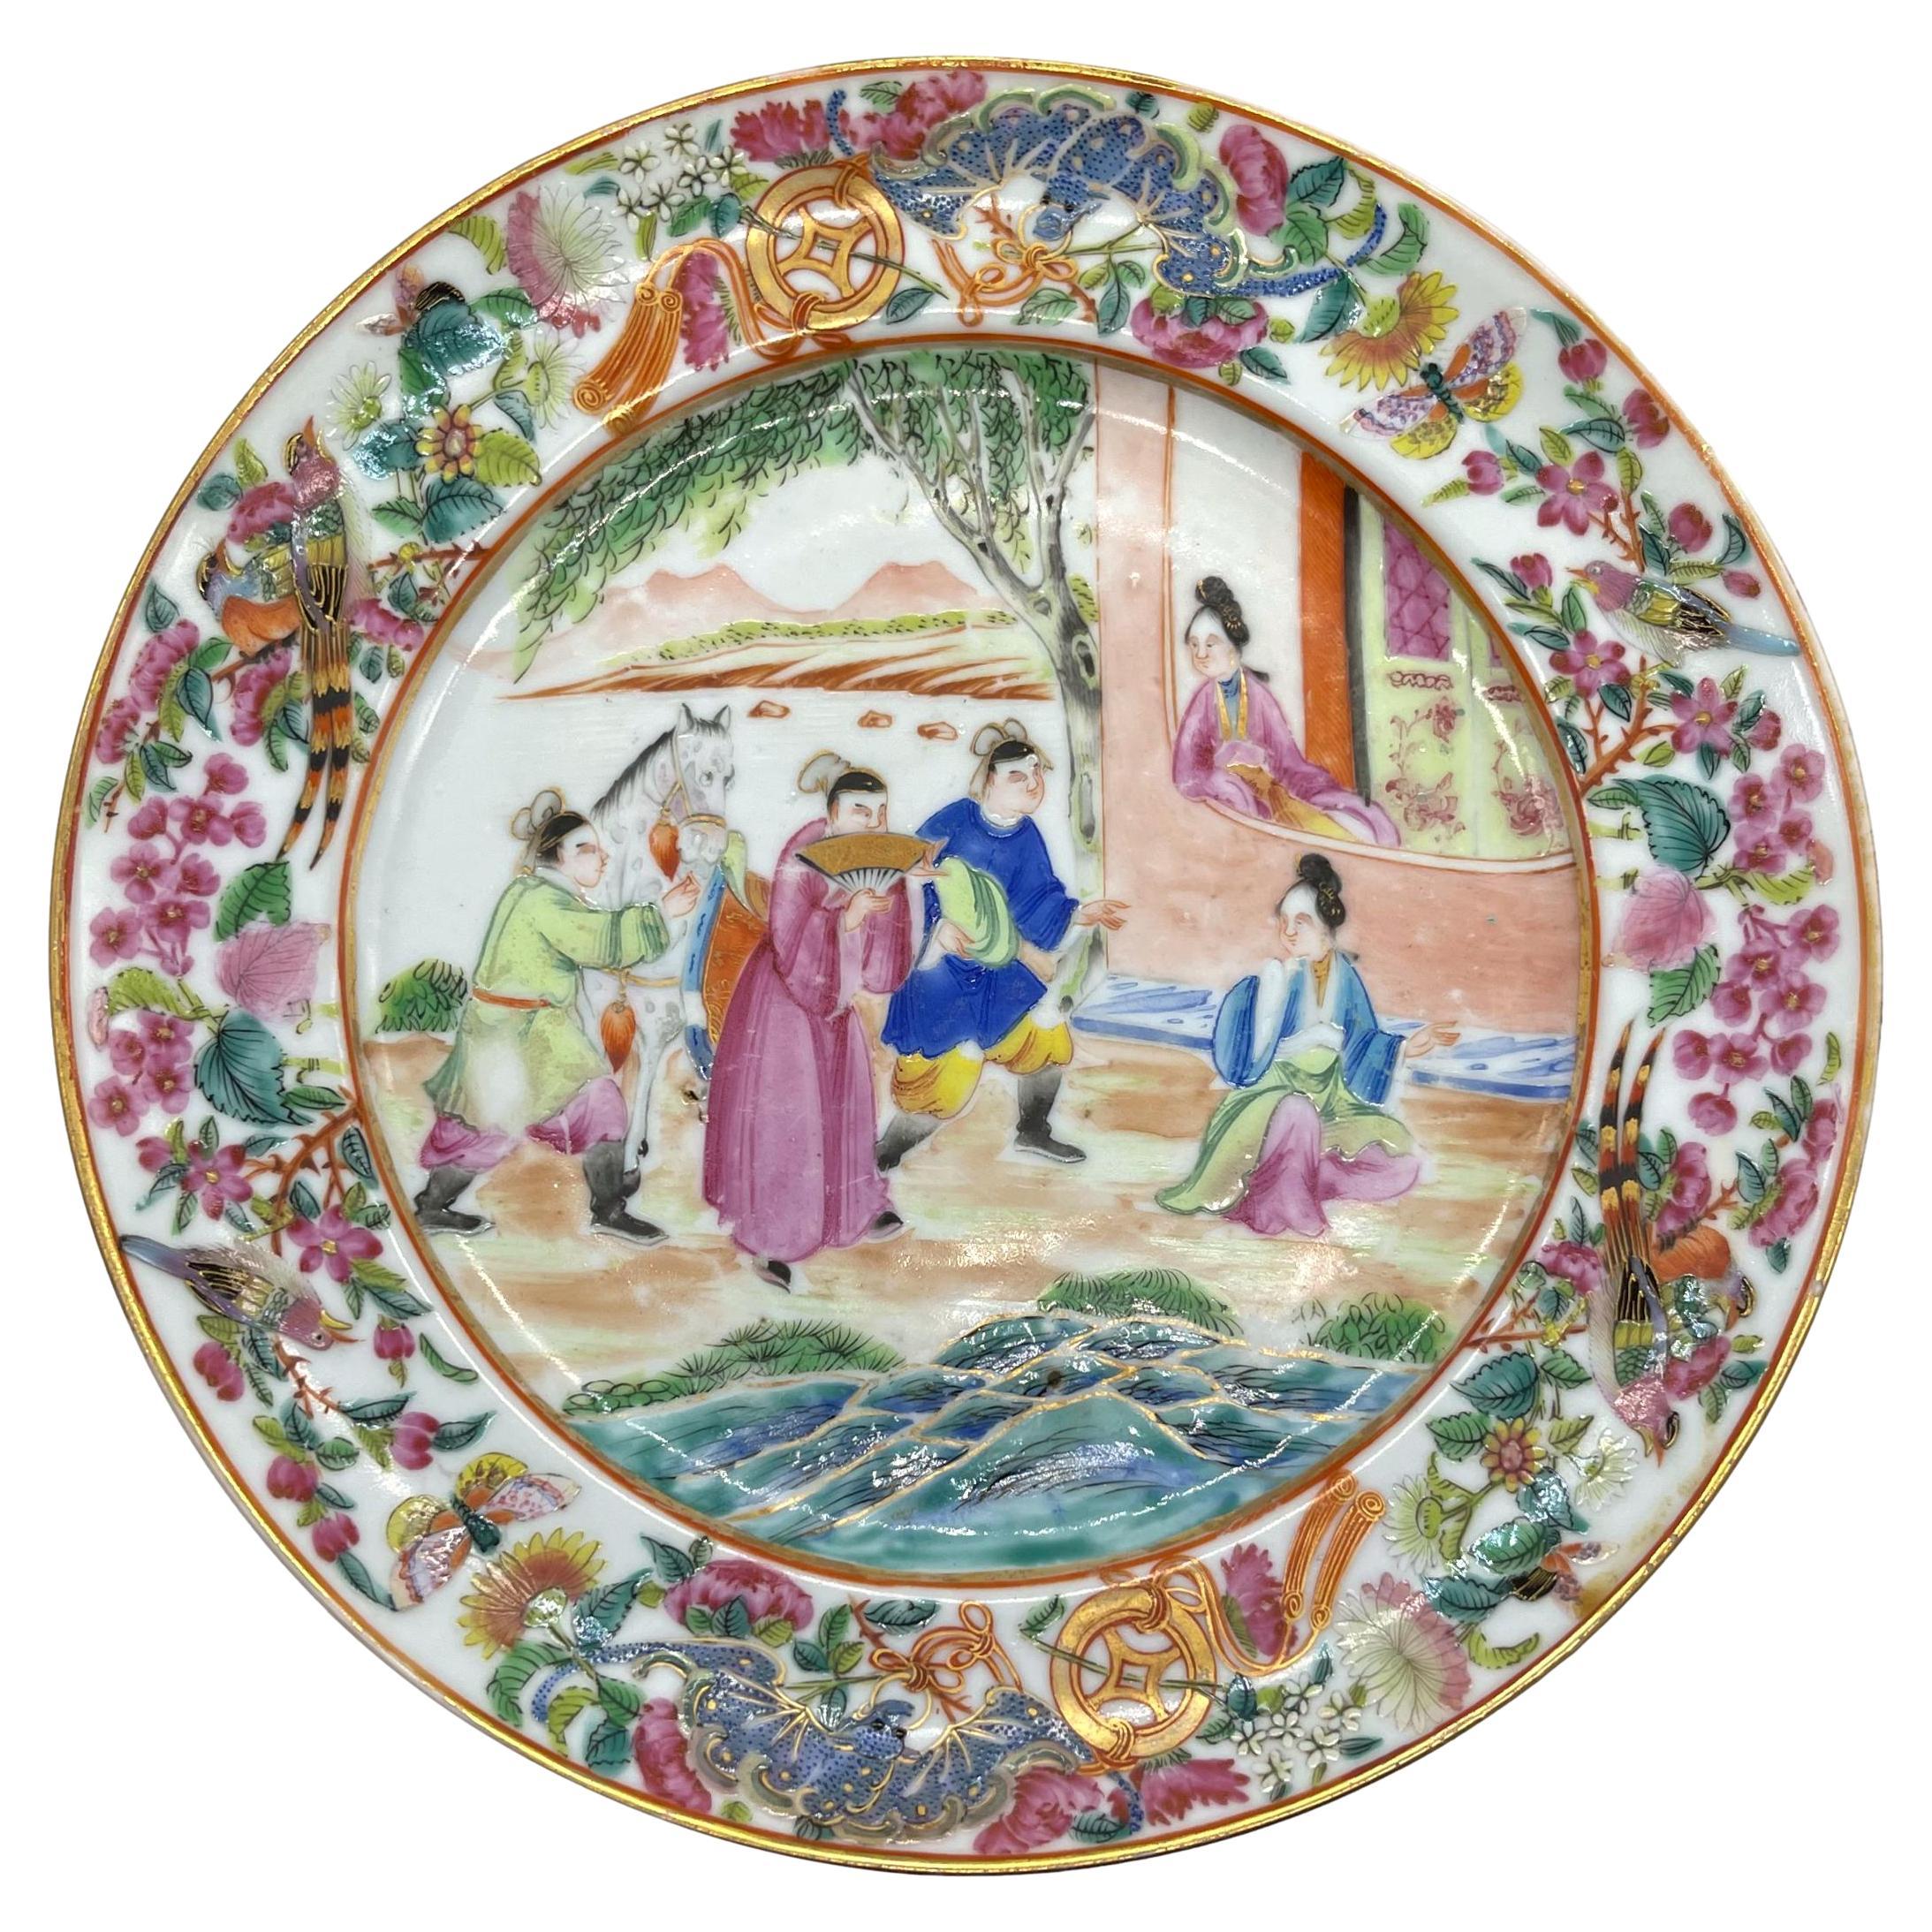 Chinese Export Porcelain Rose Mandarin Plate 8-ins, Canton, ca. 1840